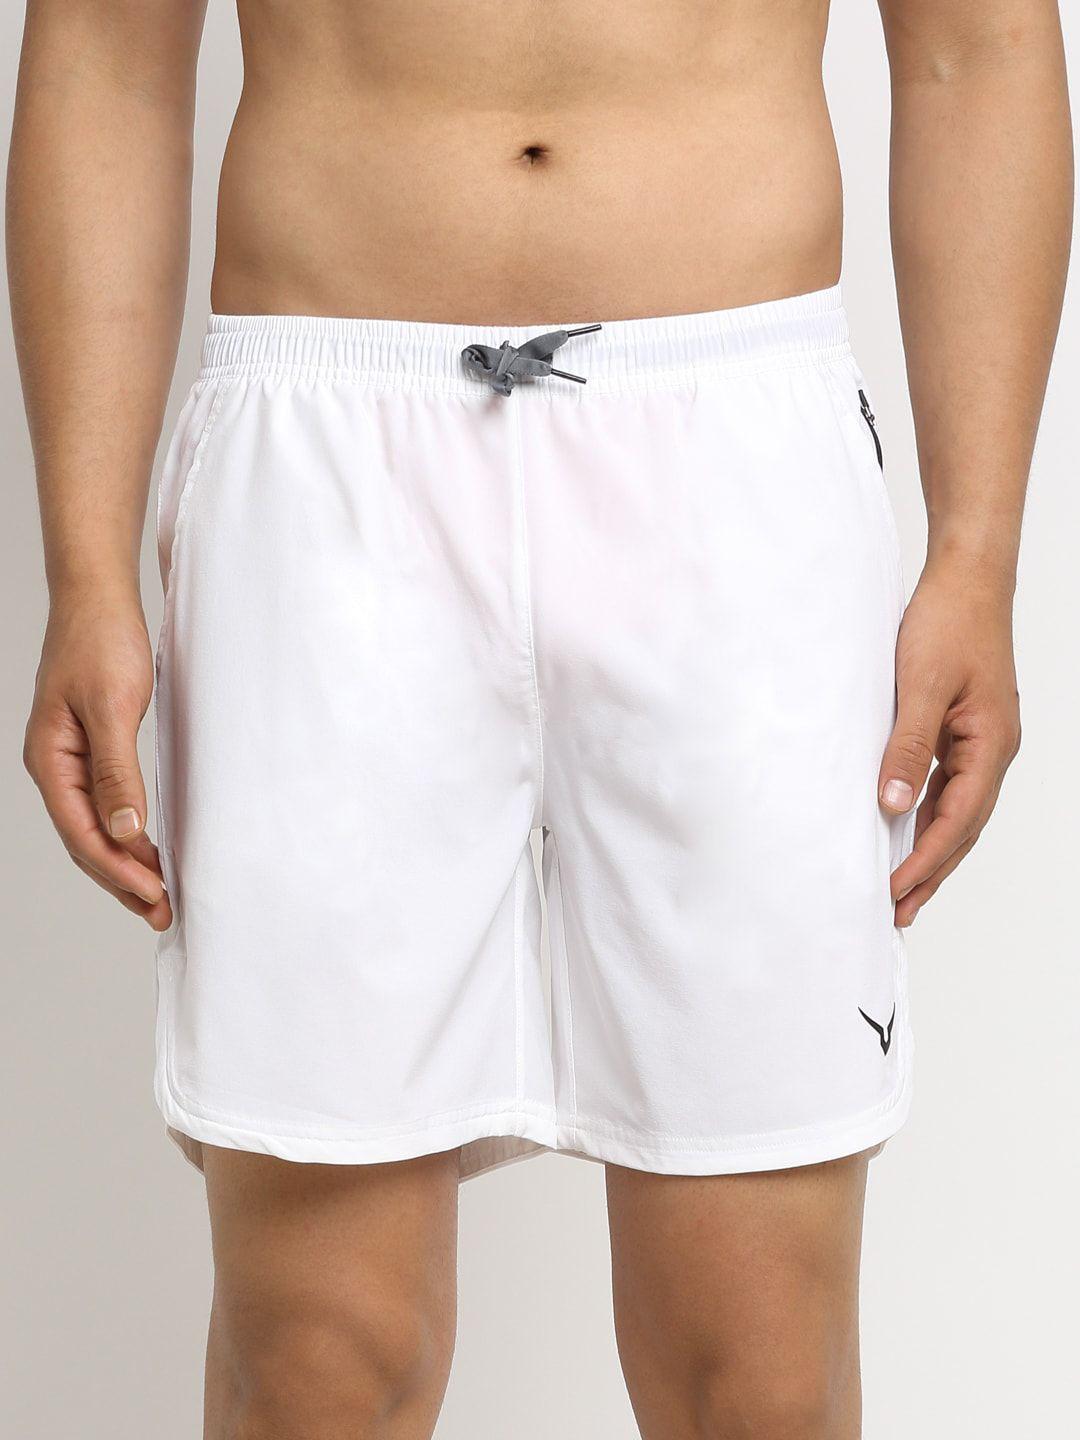 invincible men white mid-rise sports shorts